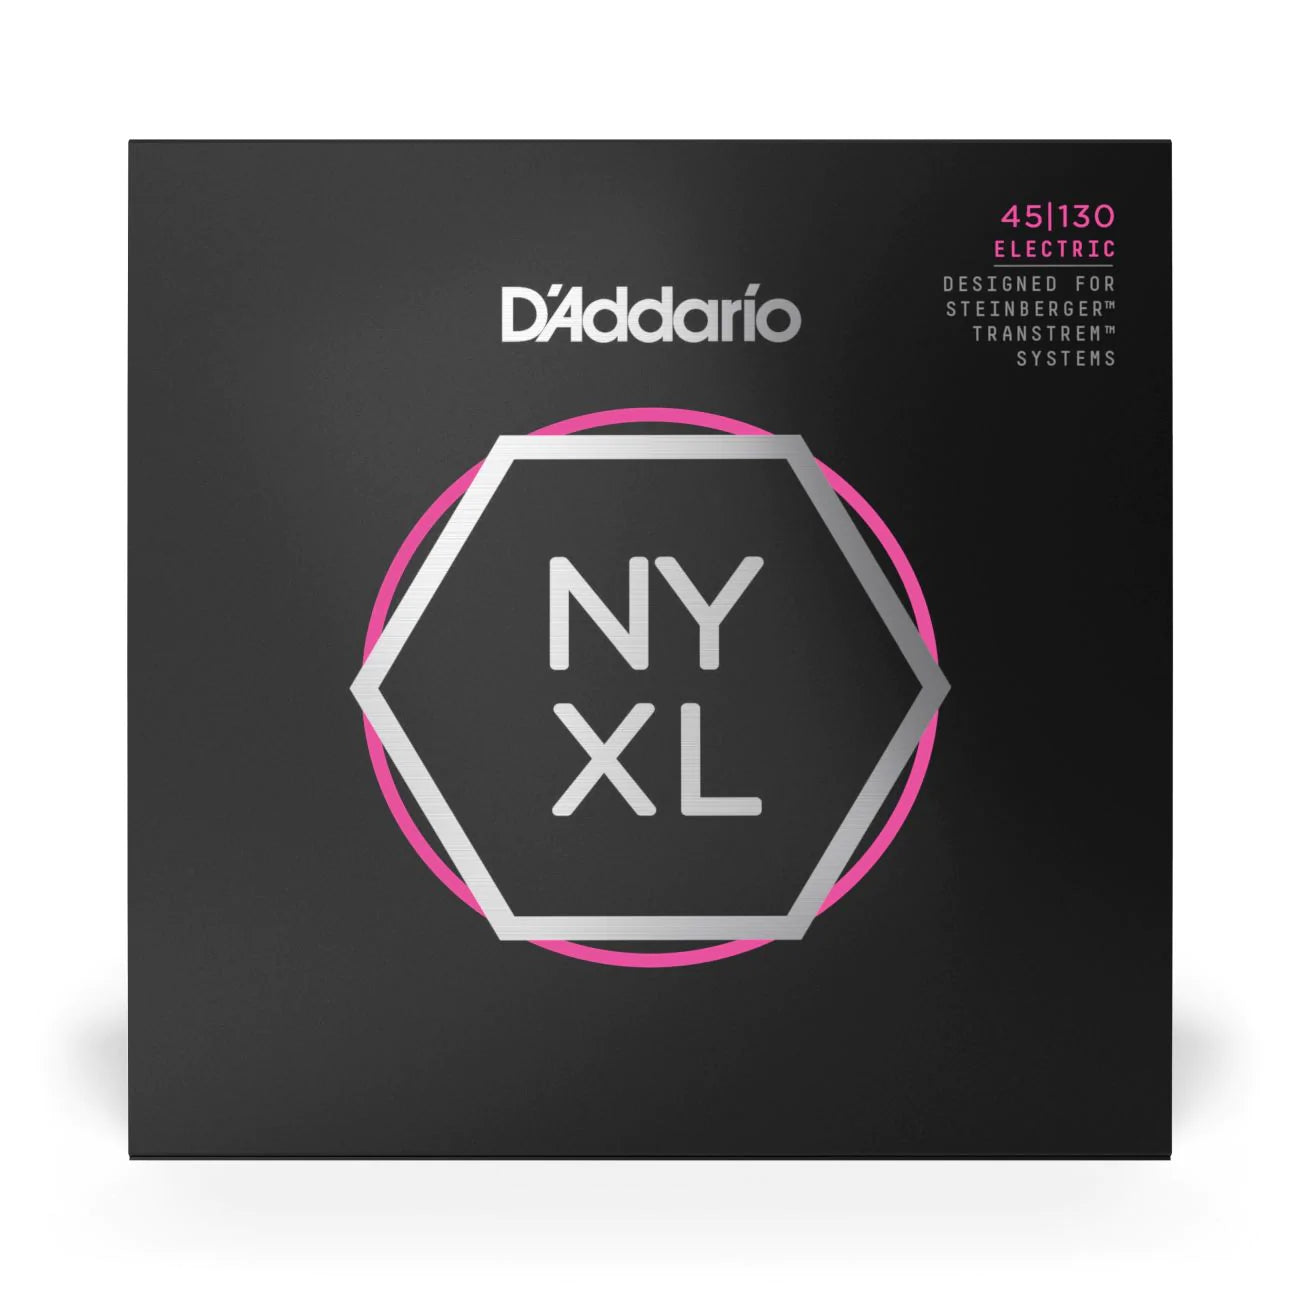 D'Addario NYXLS45130 | NYXL Nickel Wound Bass Strings 45-130 Gauge | Regular Light | Double Ball End | 5-String